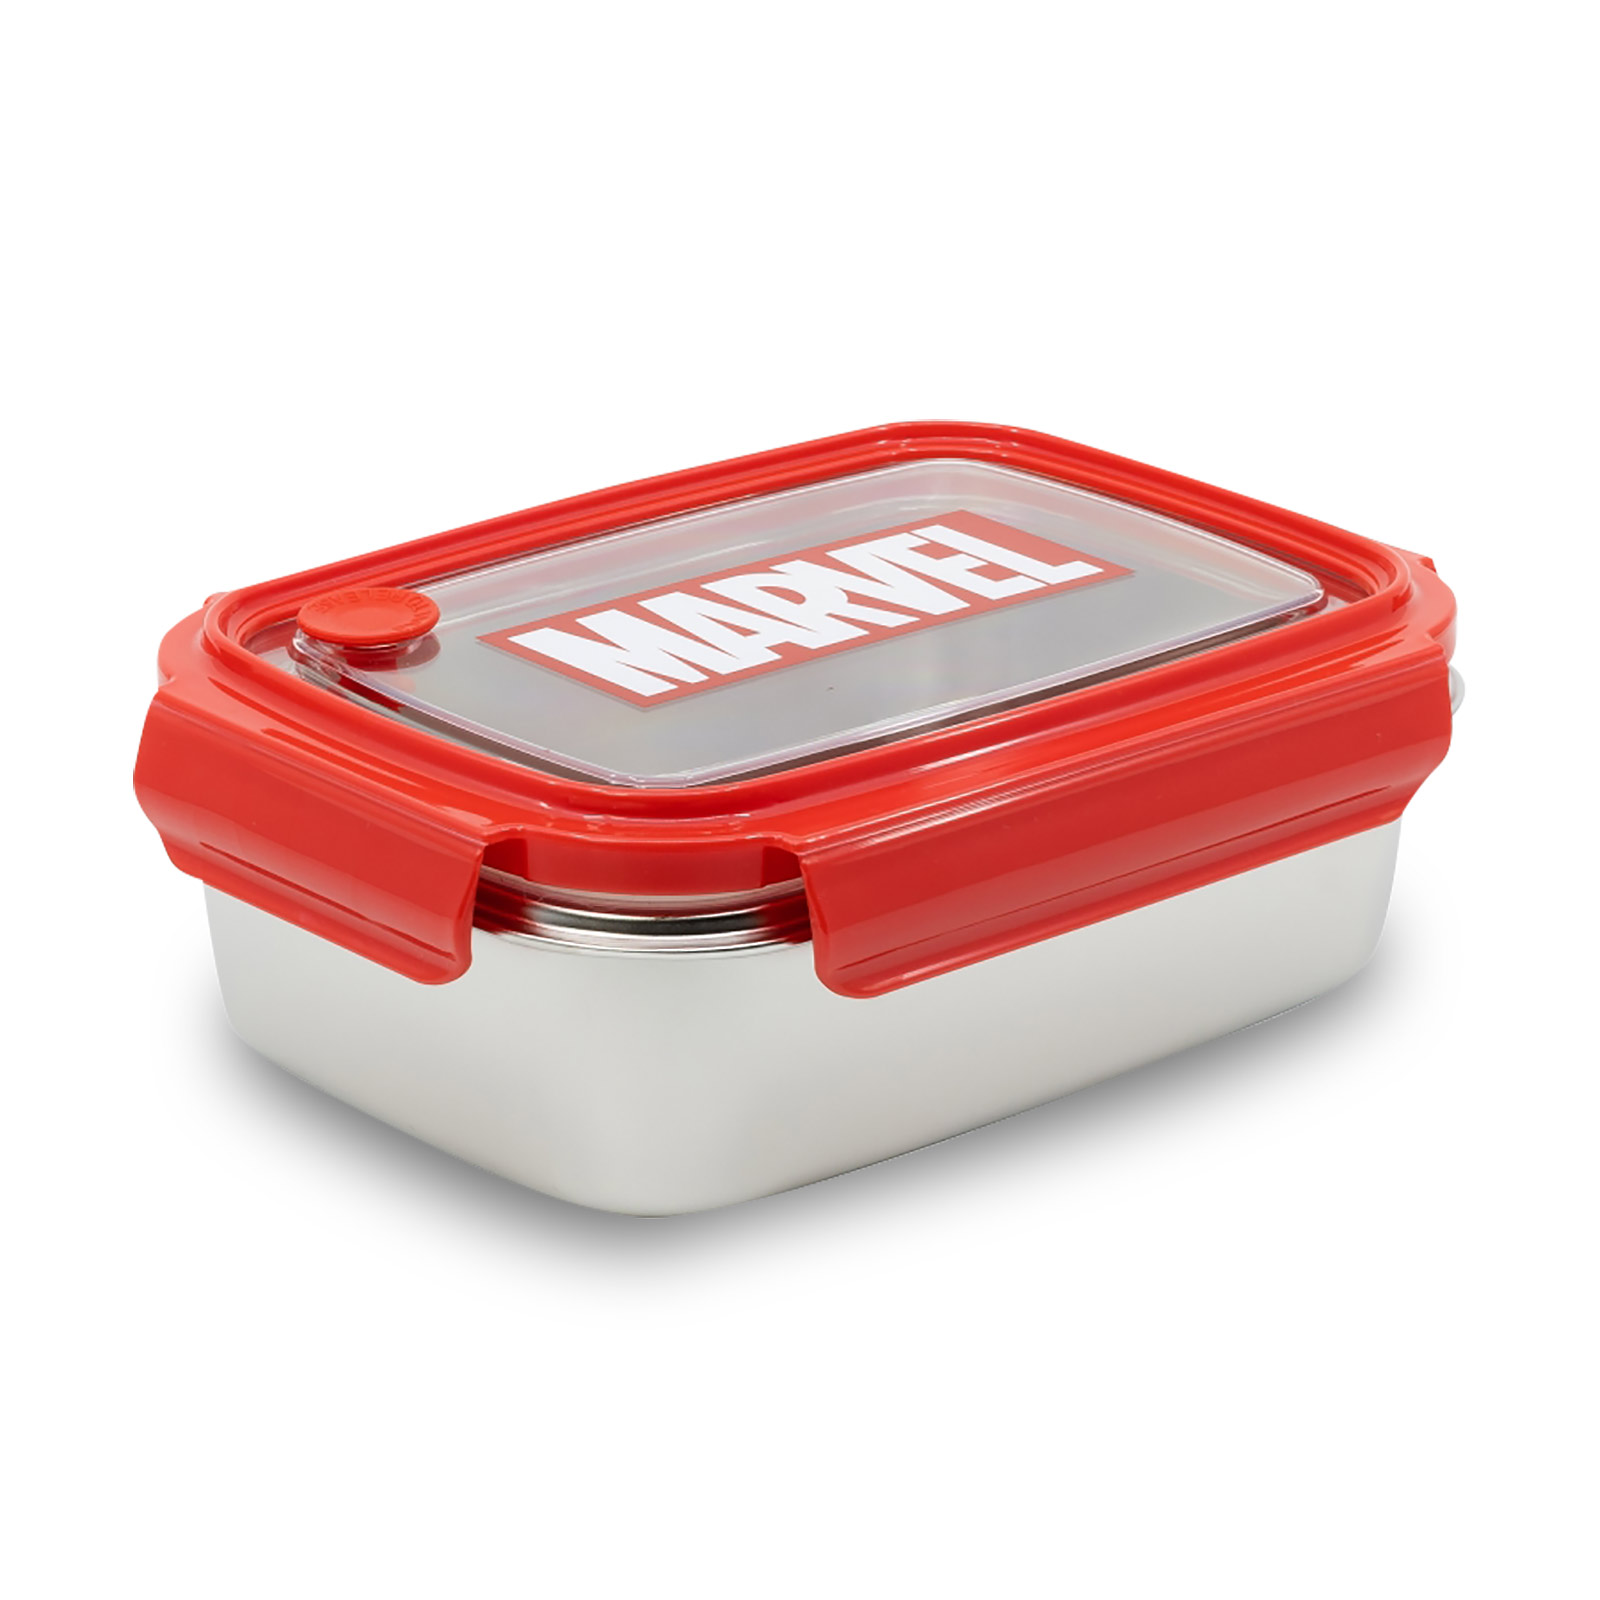 Marvel - Logo Lunchbox